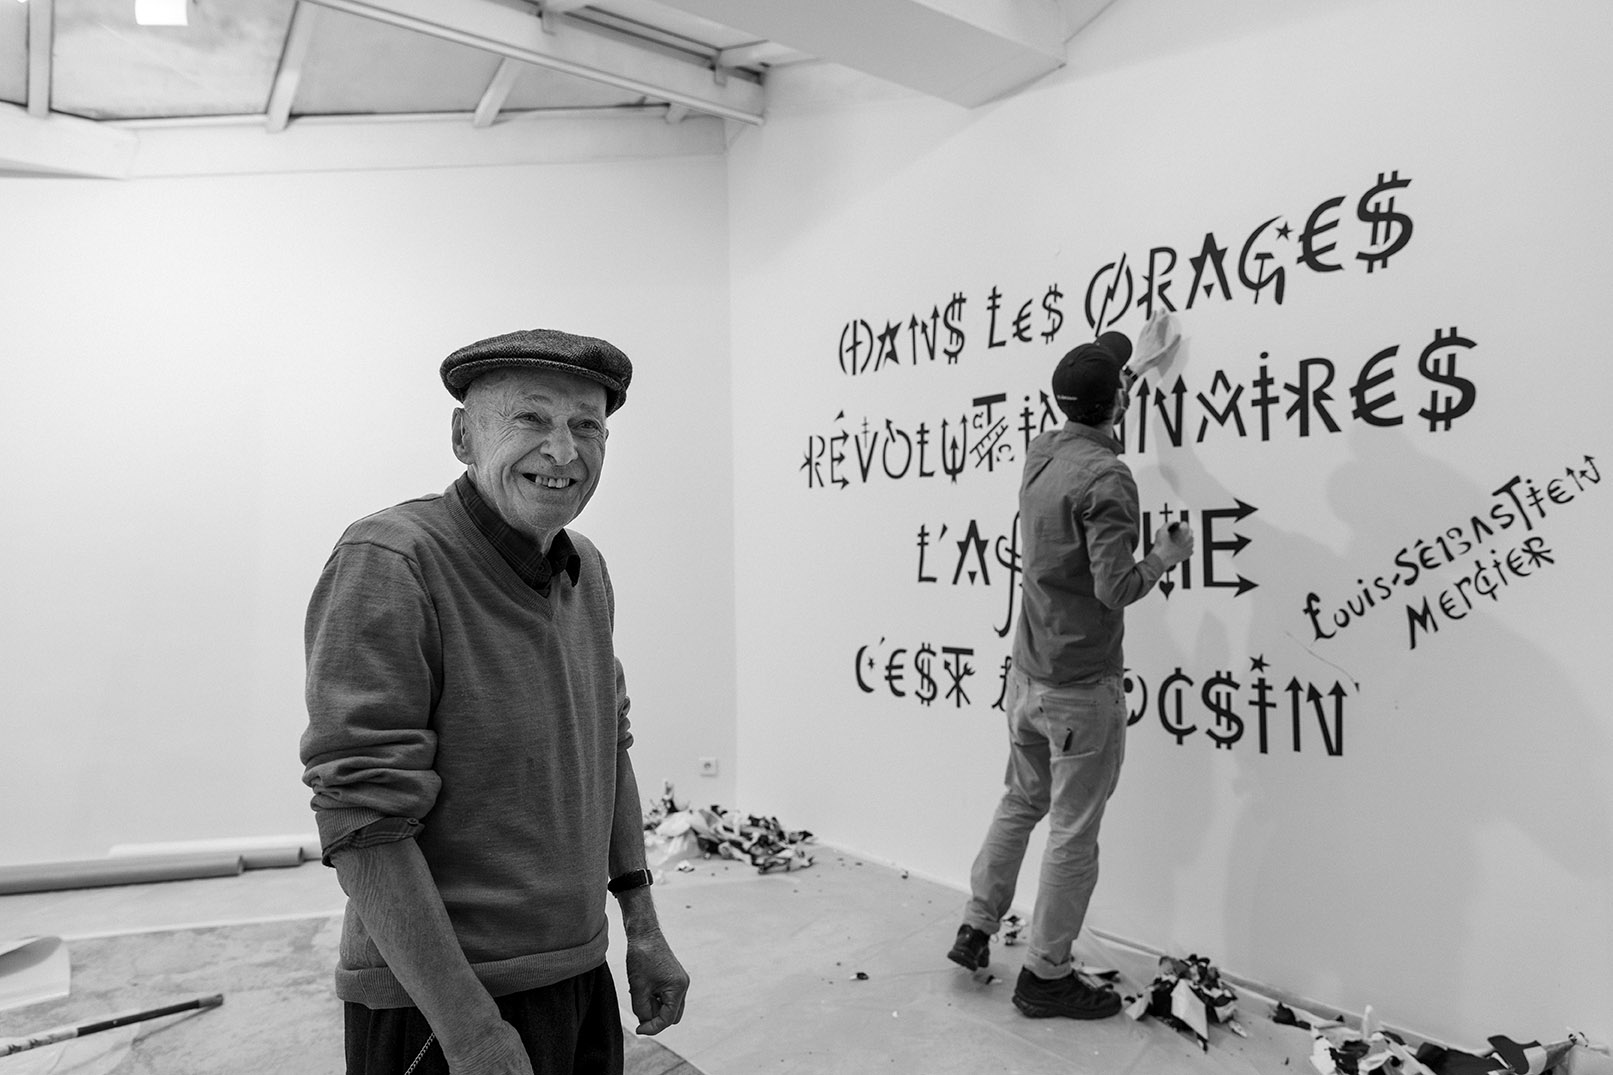 Alphabet(s) - Galerie Georges-Philippe & Nathalie Vallois